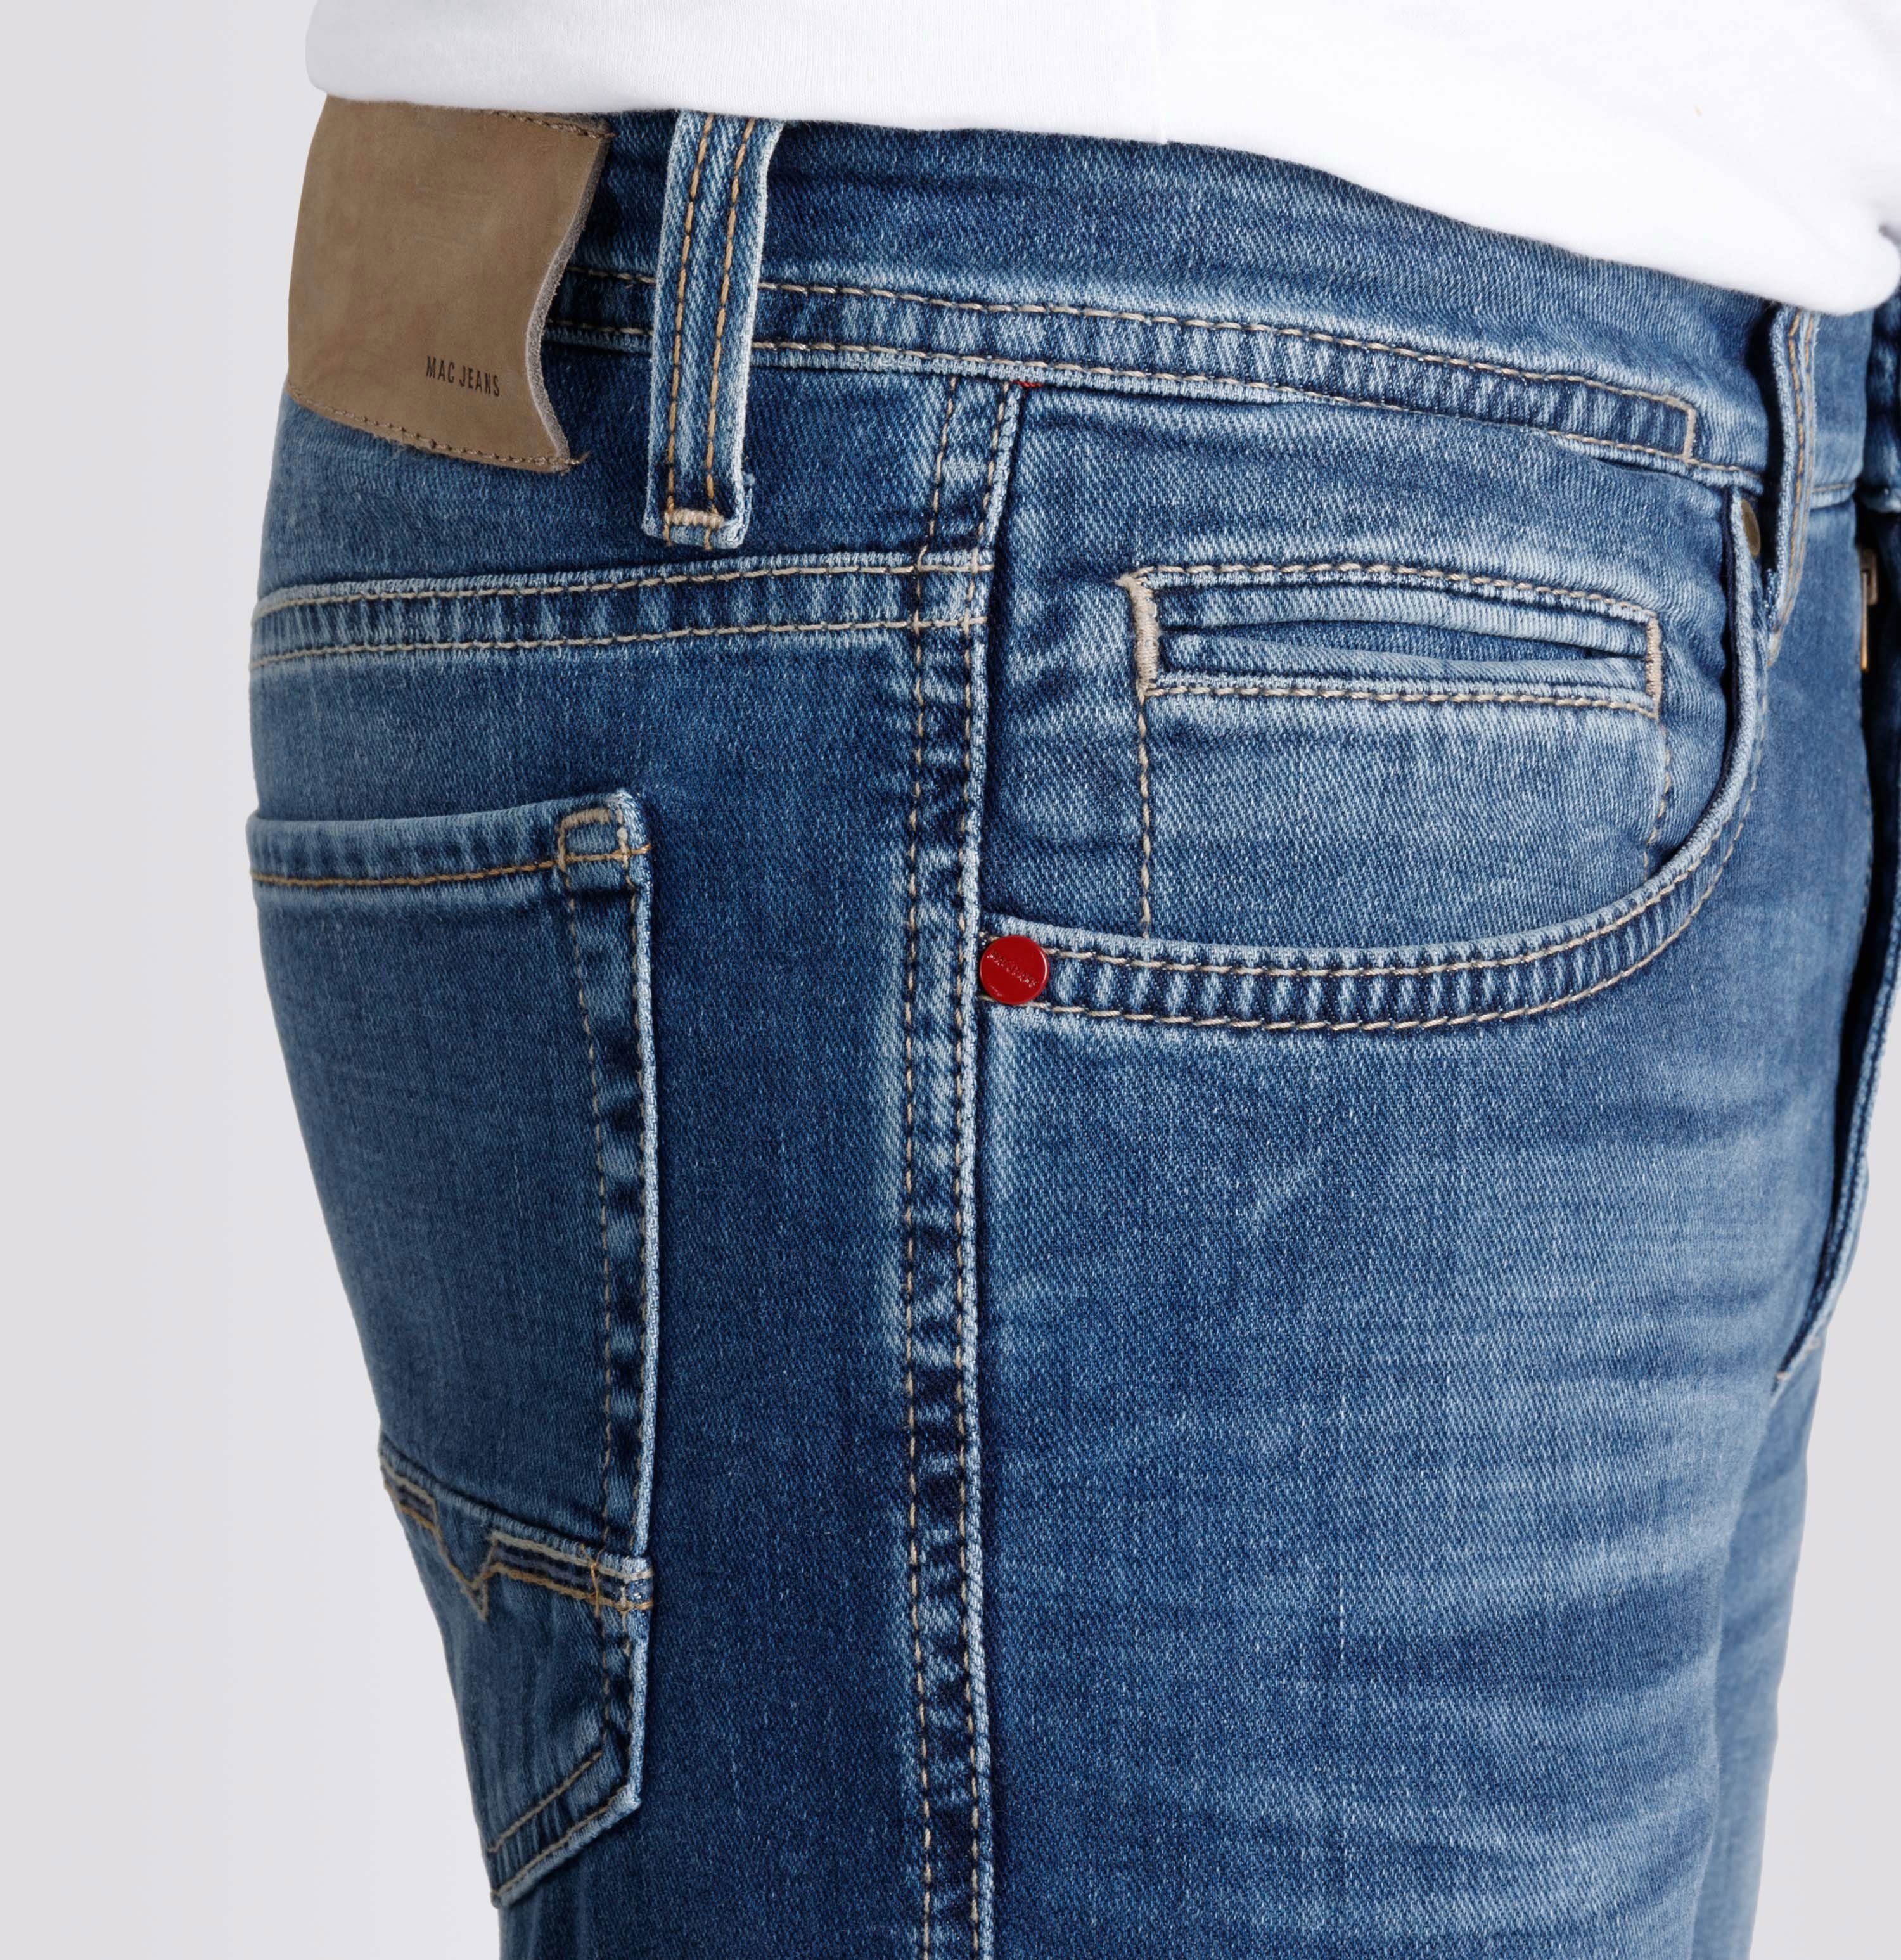 MAC 5-Pocket-Jeans Touch Wash Arne H690 Denim 0970L Soft Blue 3D Authentic Stretch - Easy